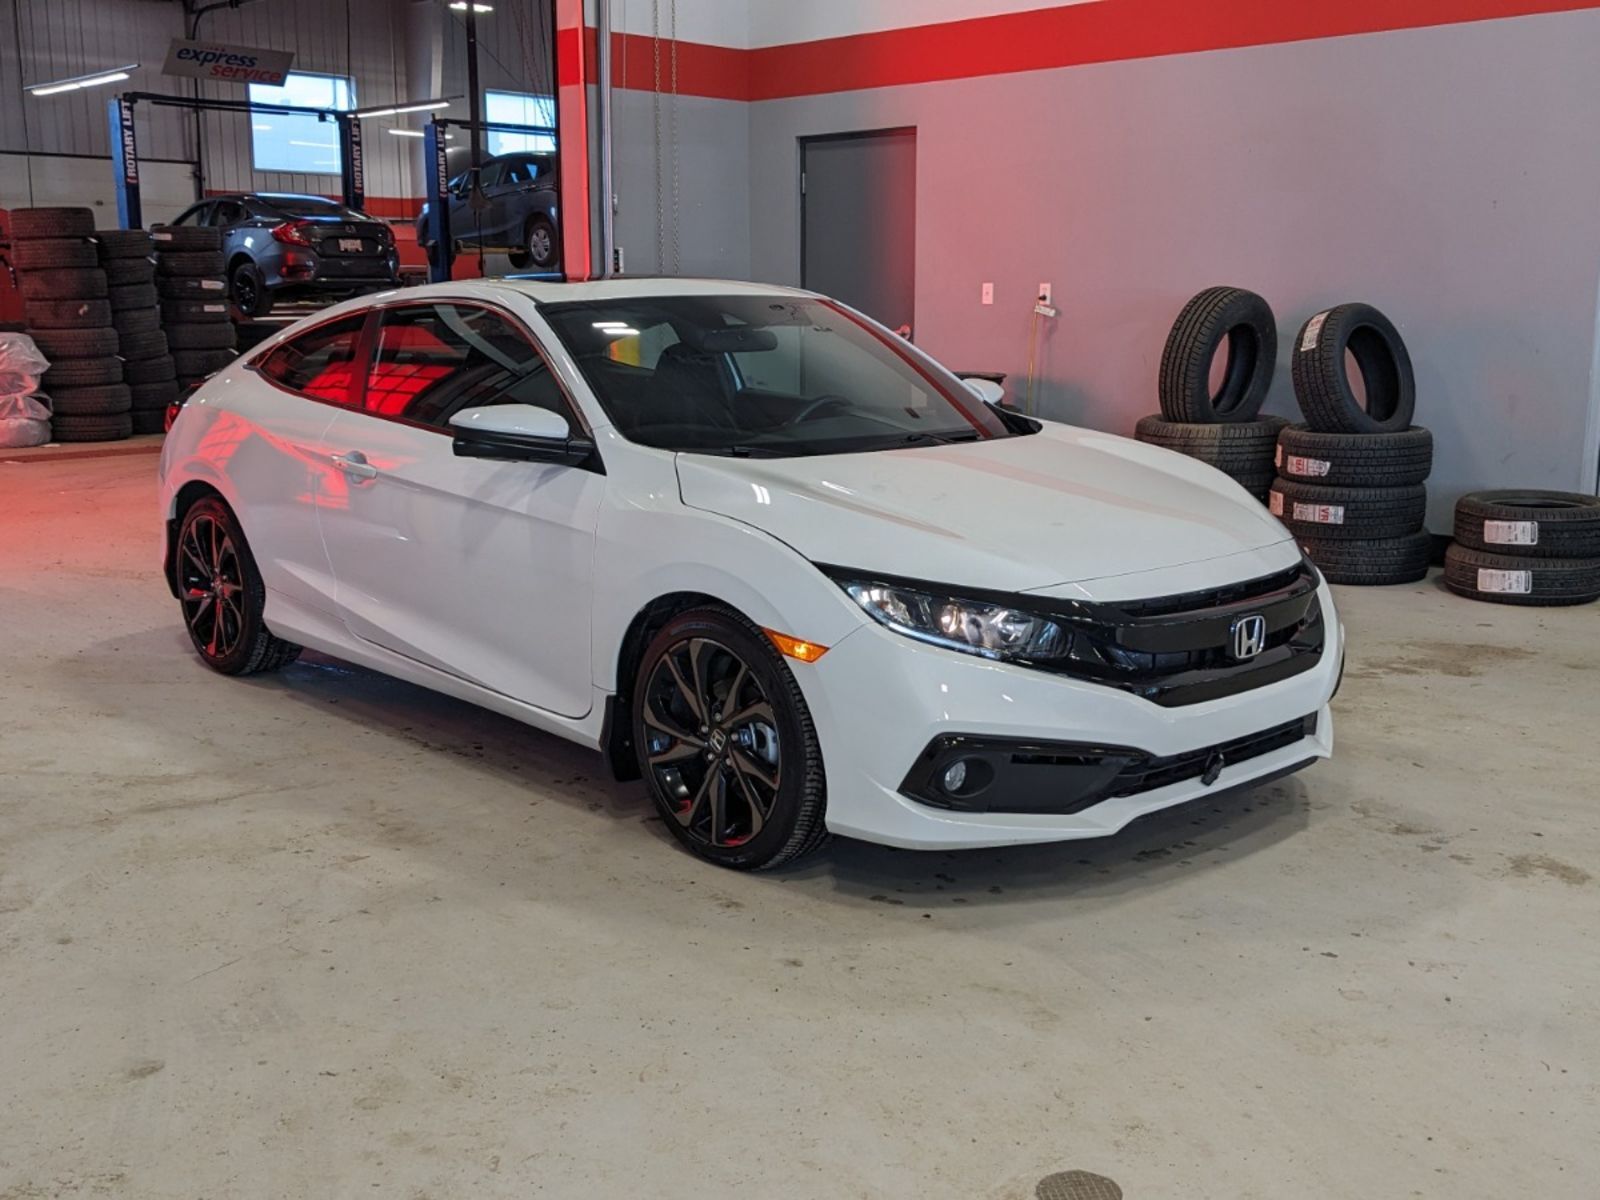 2019 Honda Civic Coupe Sport - Heated seats, sunroof, remote start